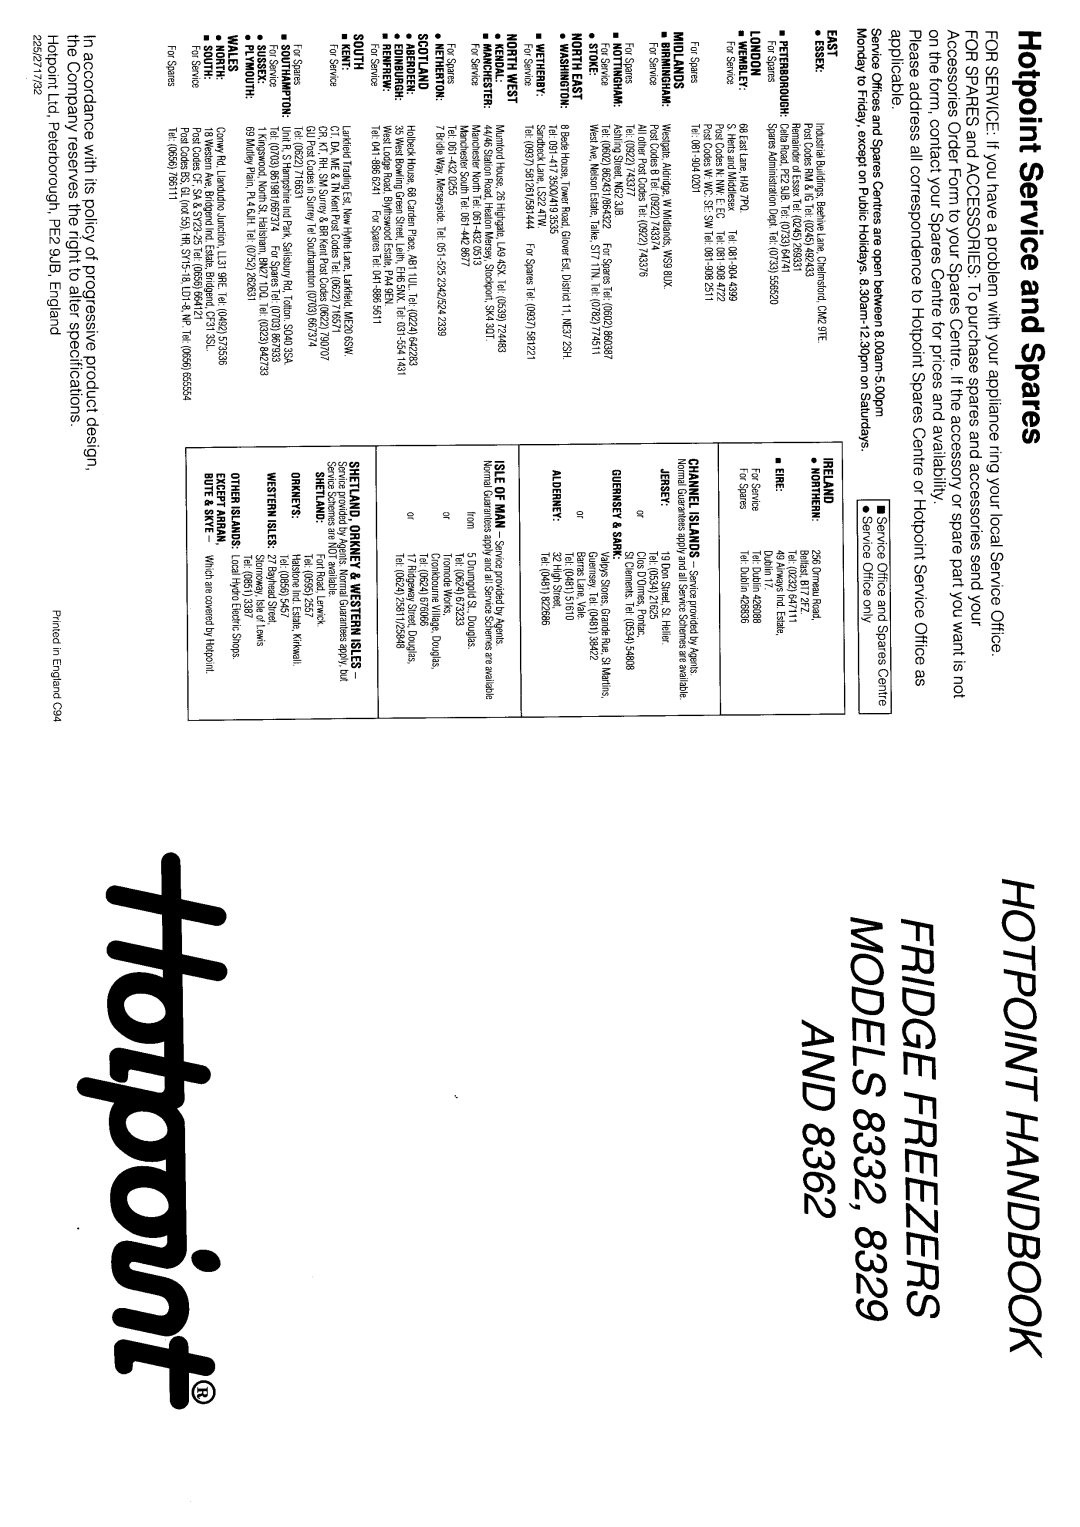 Hotpoint 8362 manual 